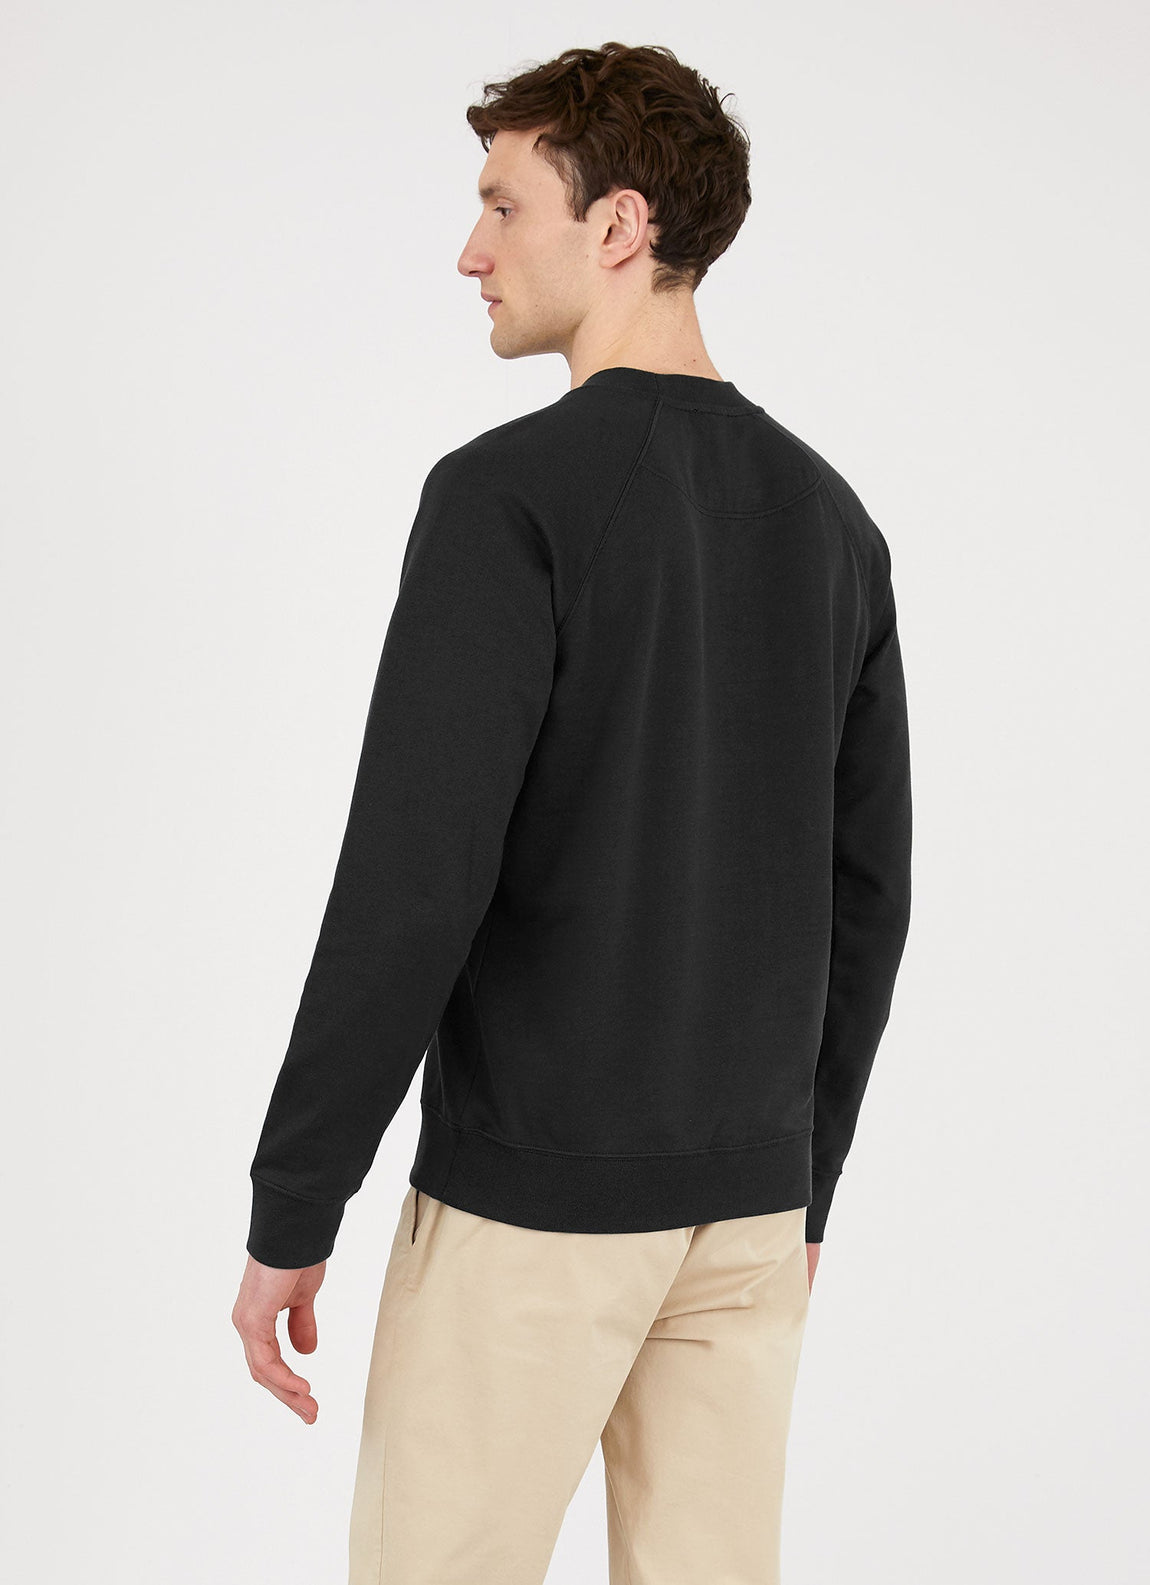 Men's Sea Island Cotton Sweatshirt in Black